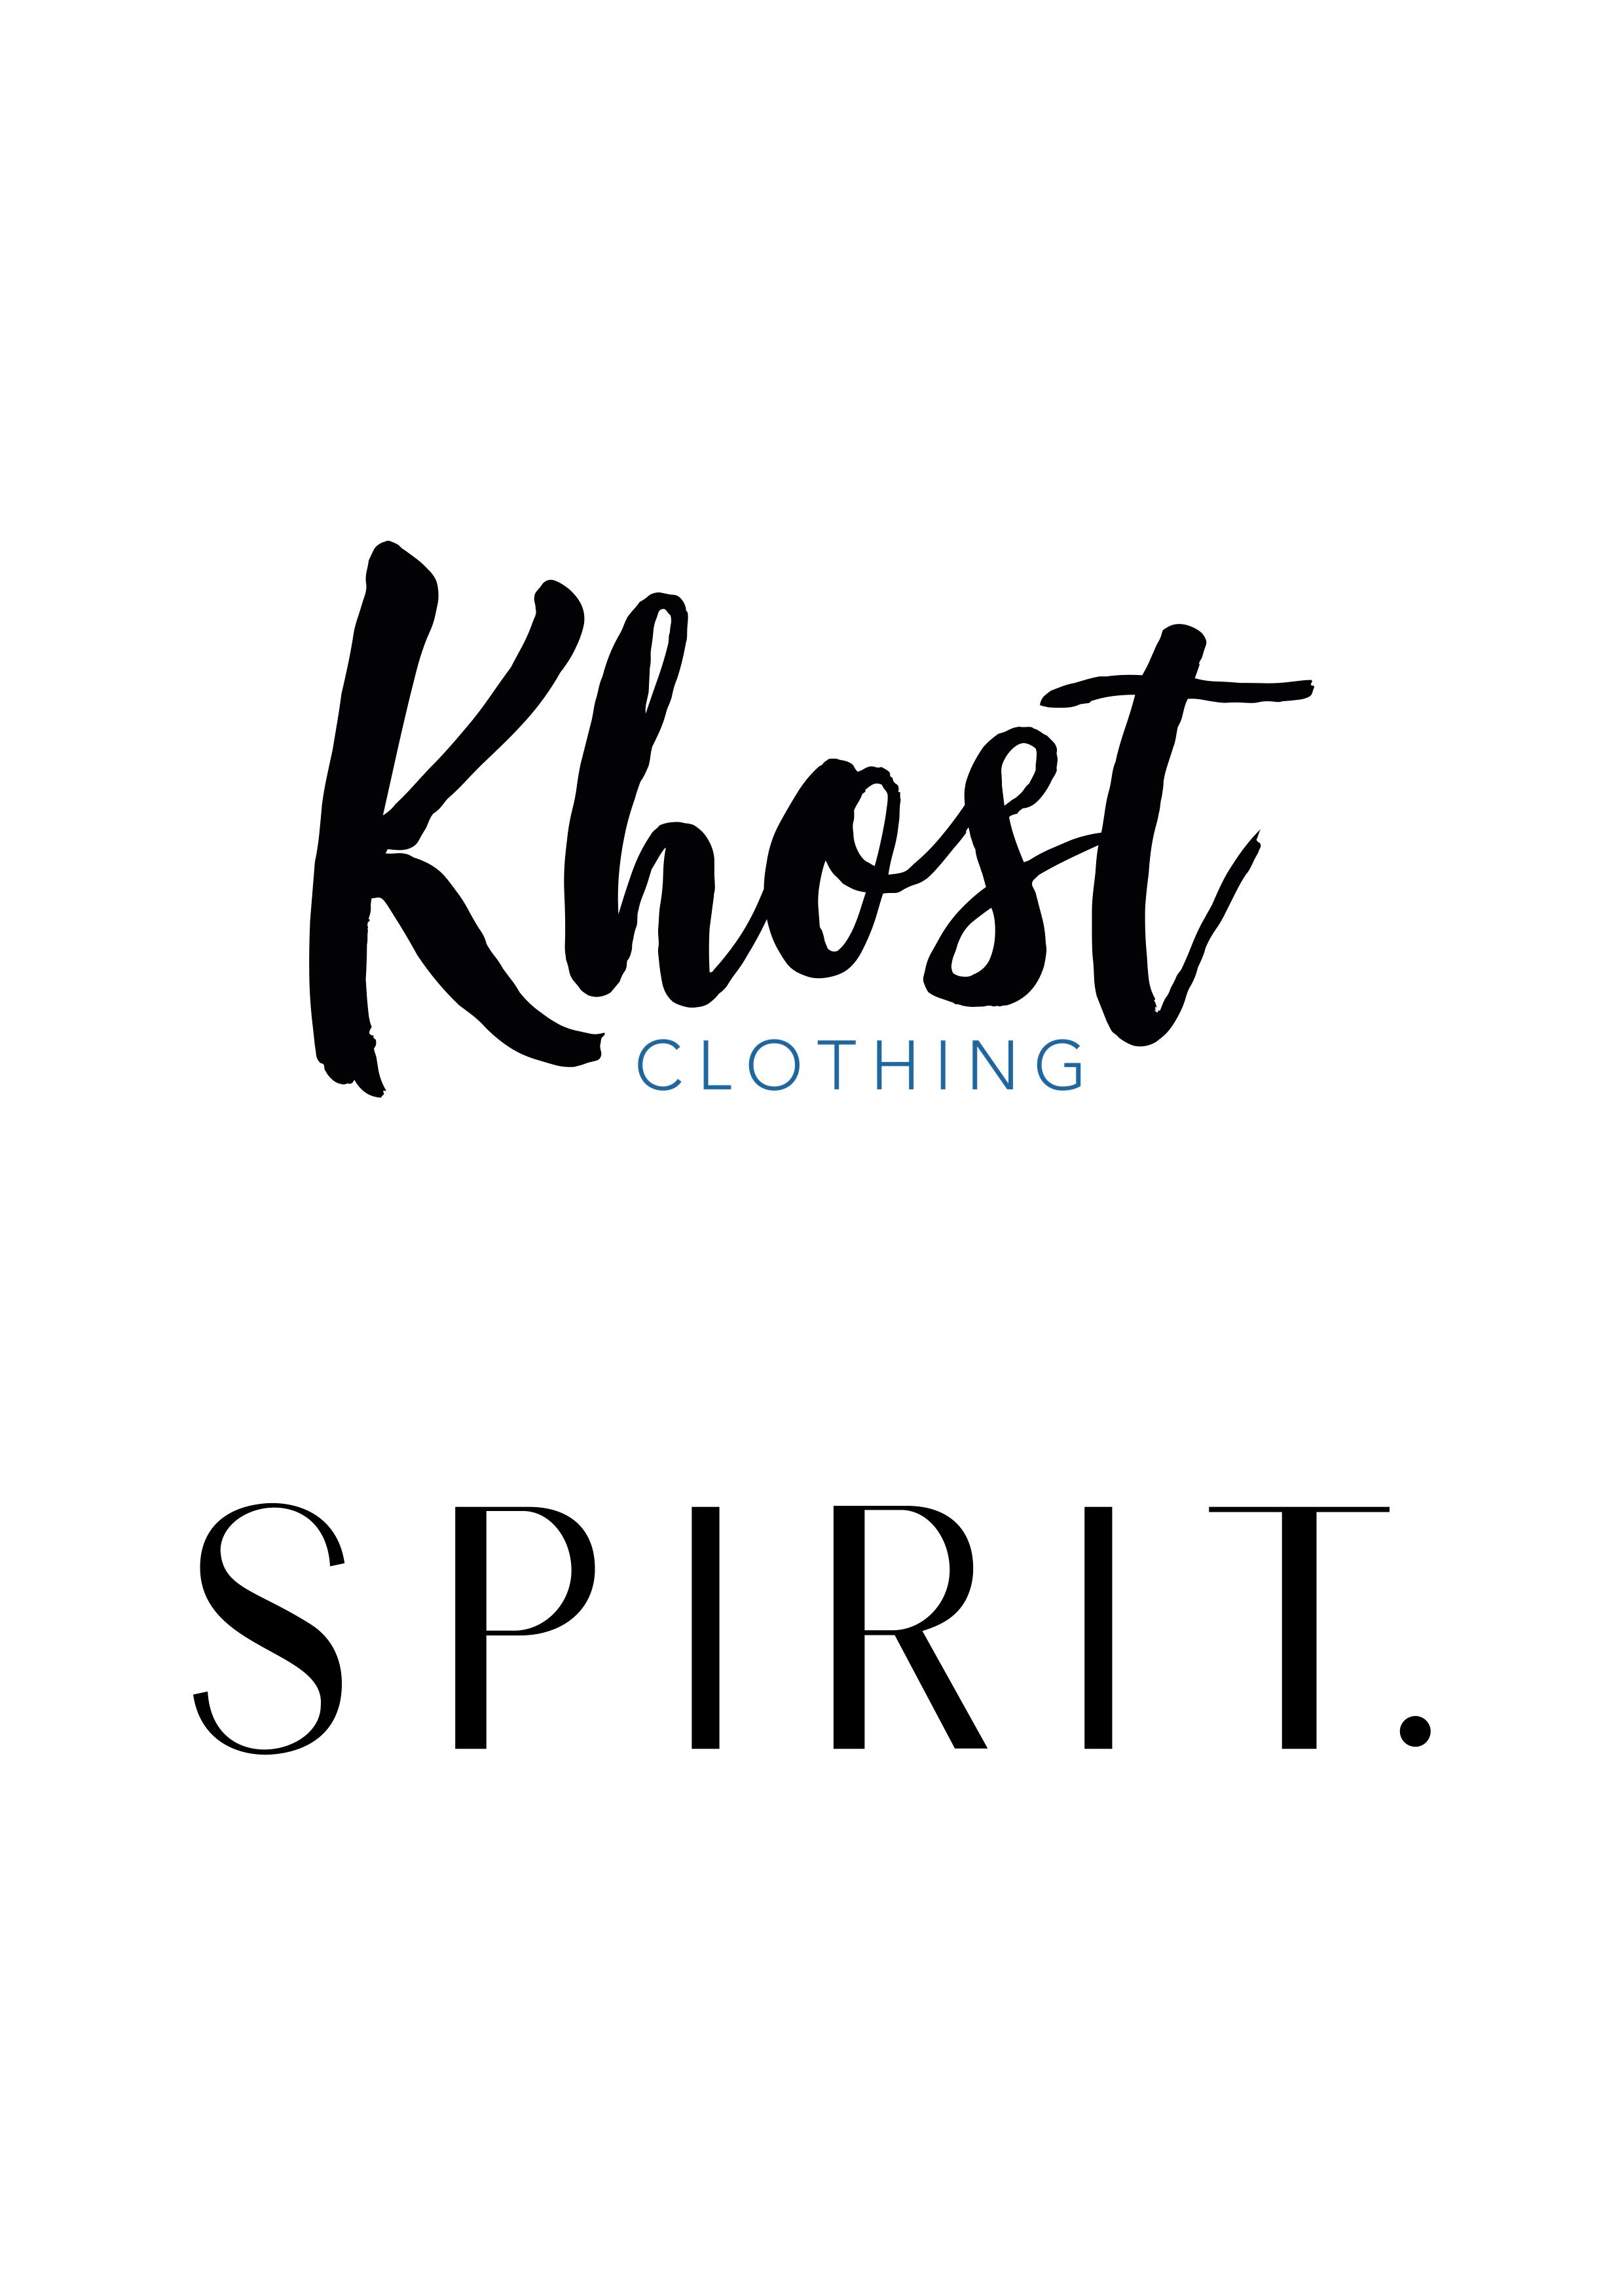 Khost & Spirit